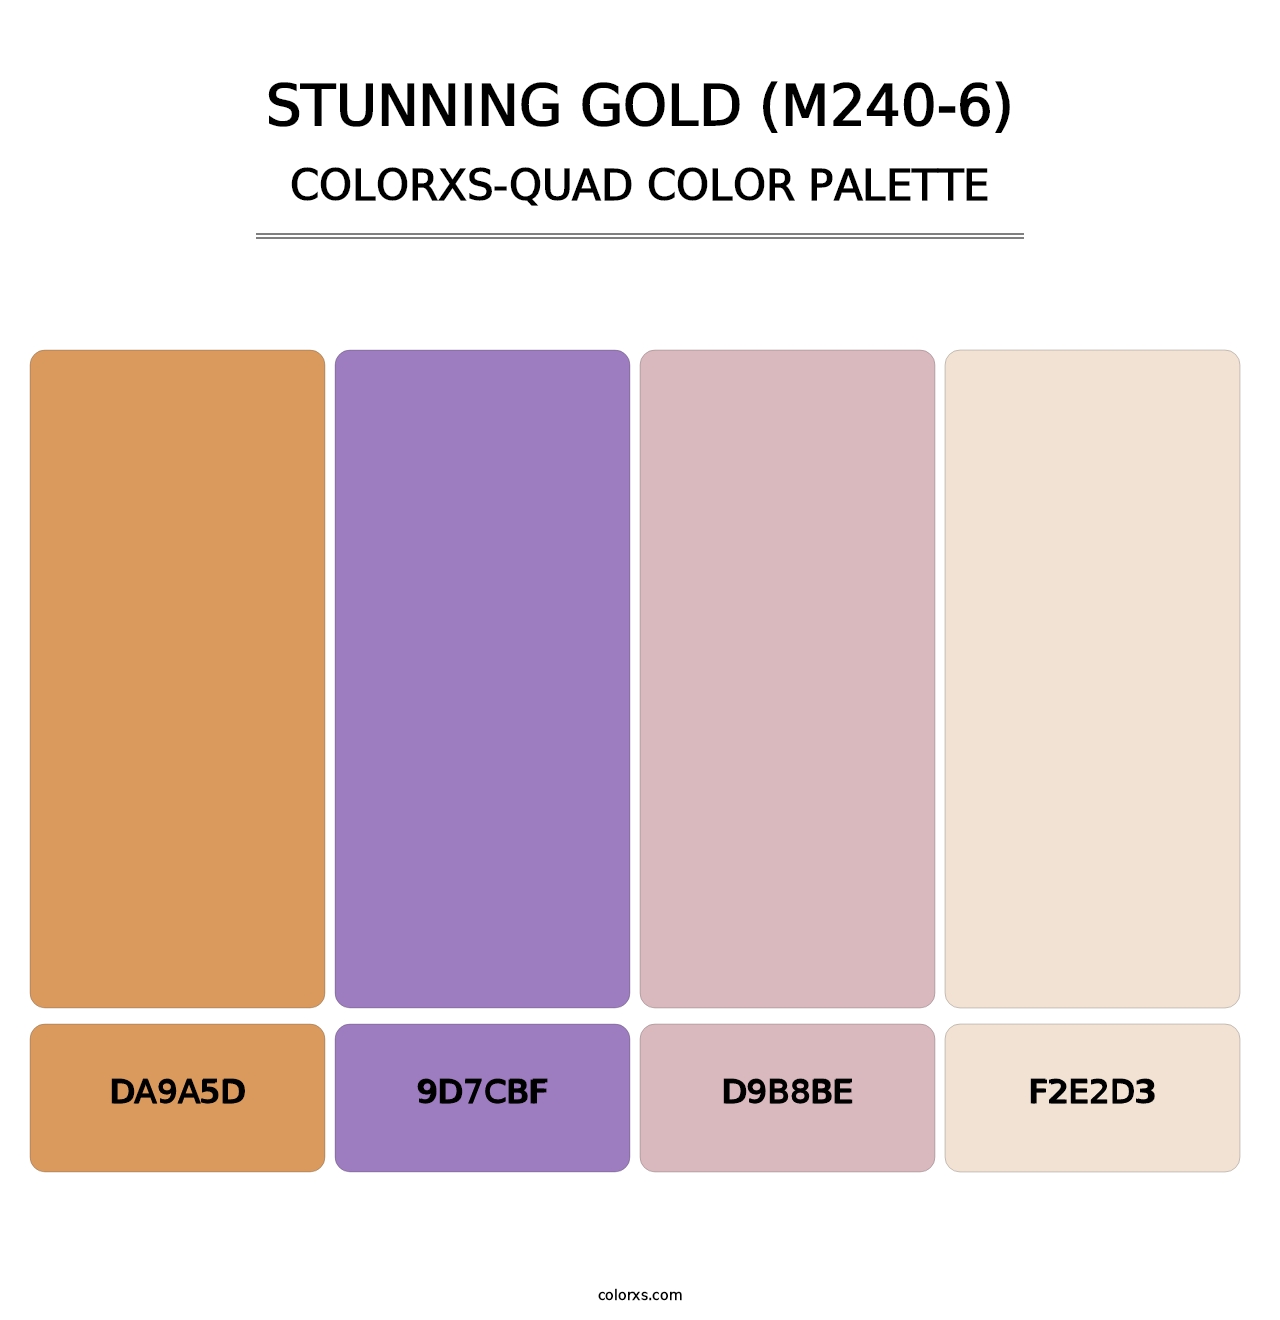 Stunning Gold (M240-6) - Colorxs Quad Palette